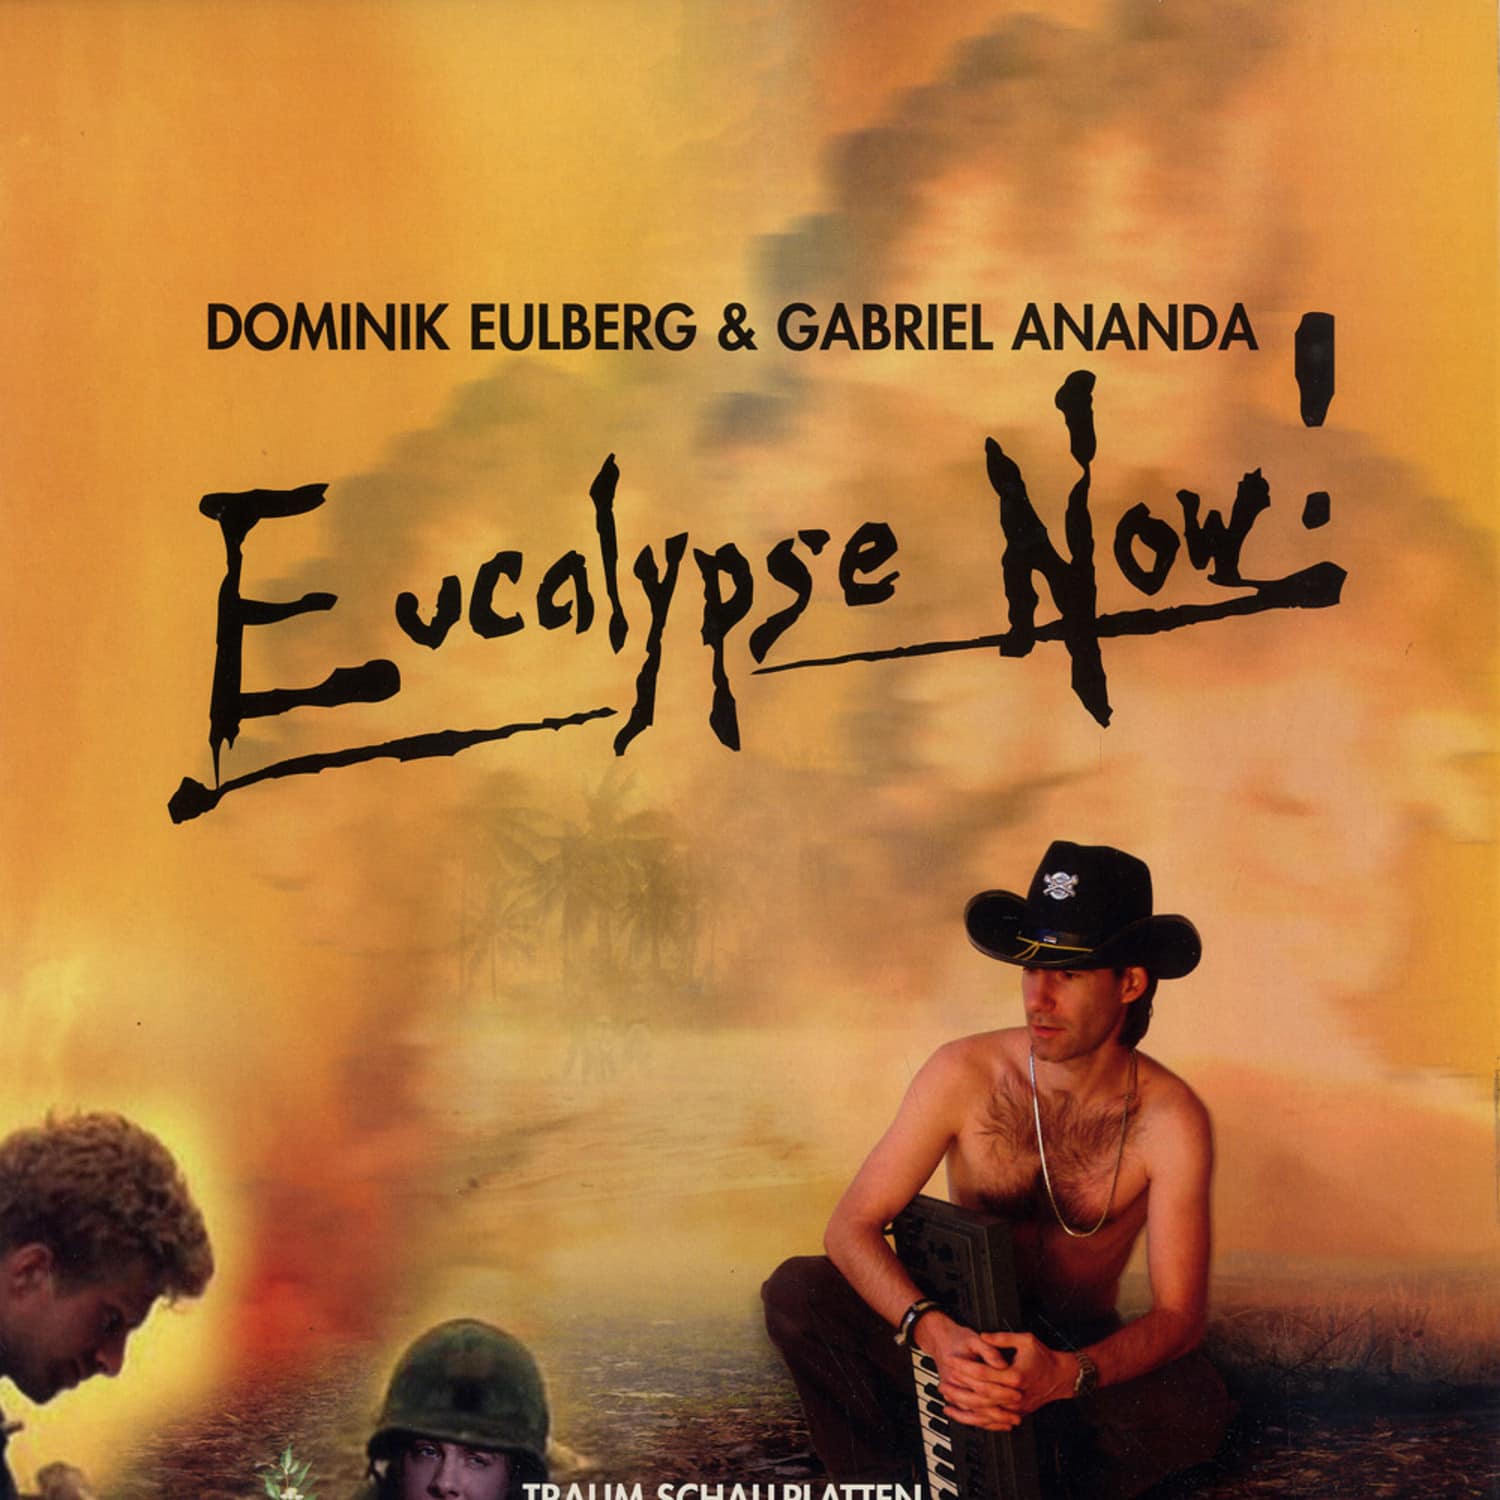 Dominik Eulberg & Gabriel Ananda - EUCALYPSE NOW!